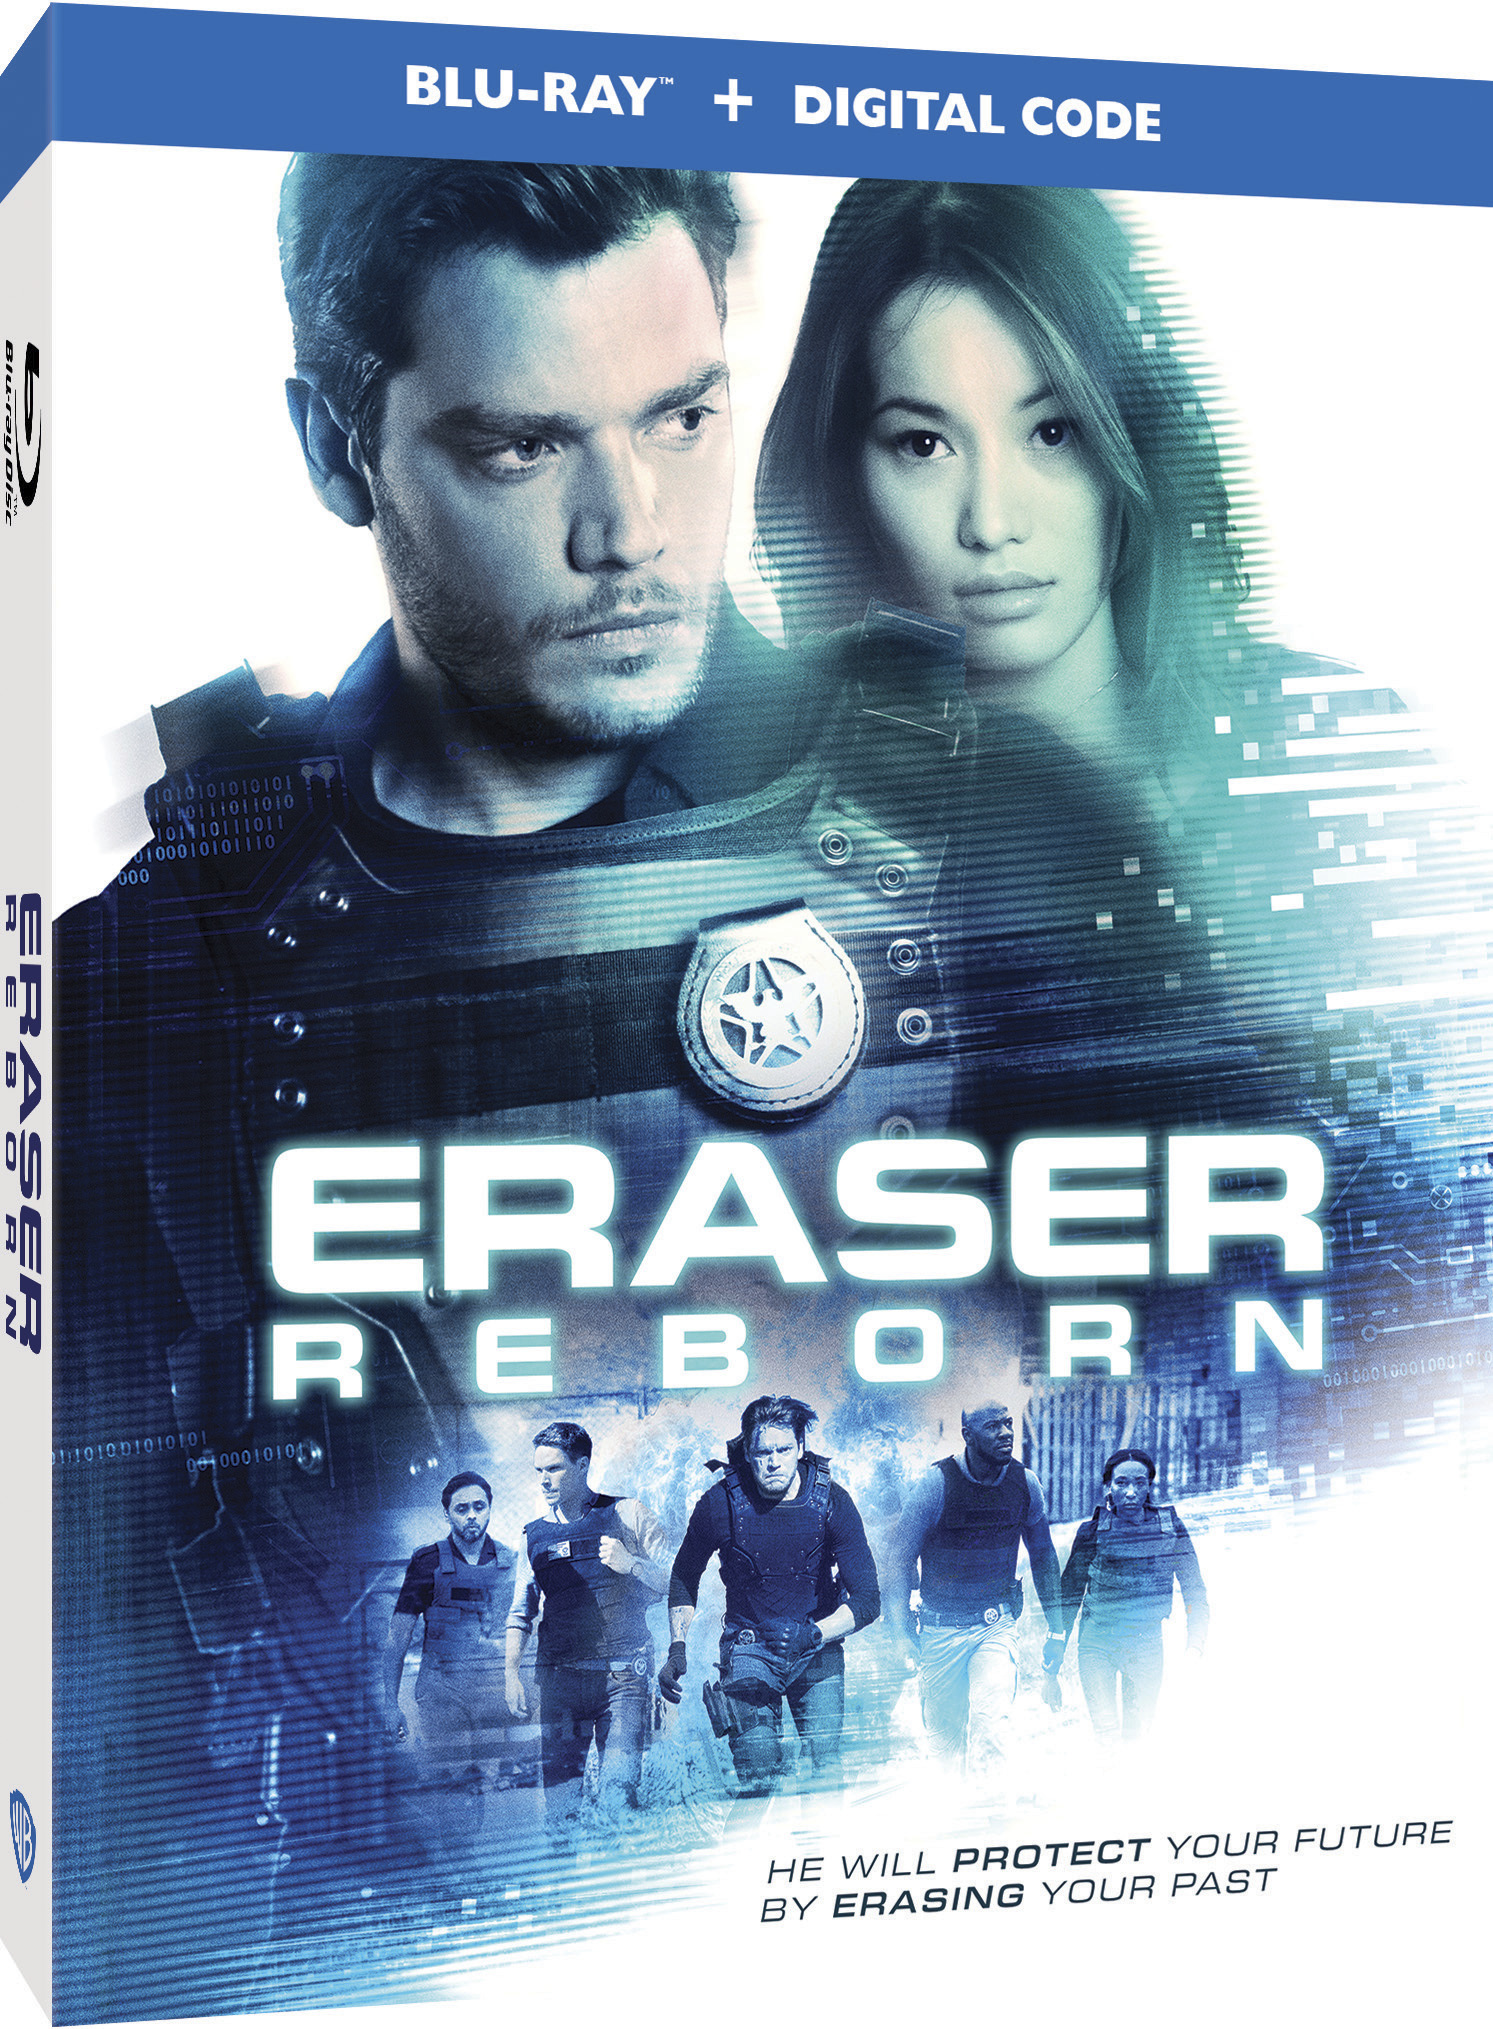 Eraser Reborn Blu-ray Review